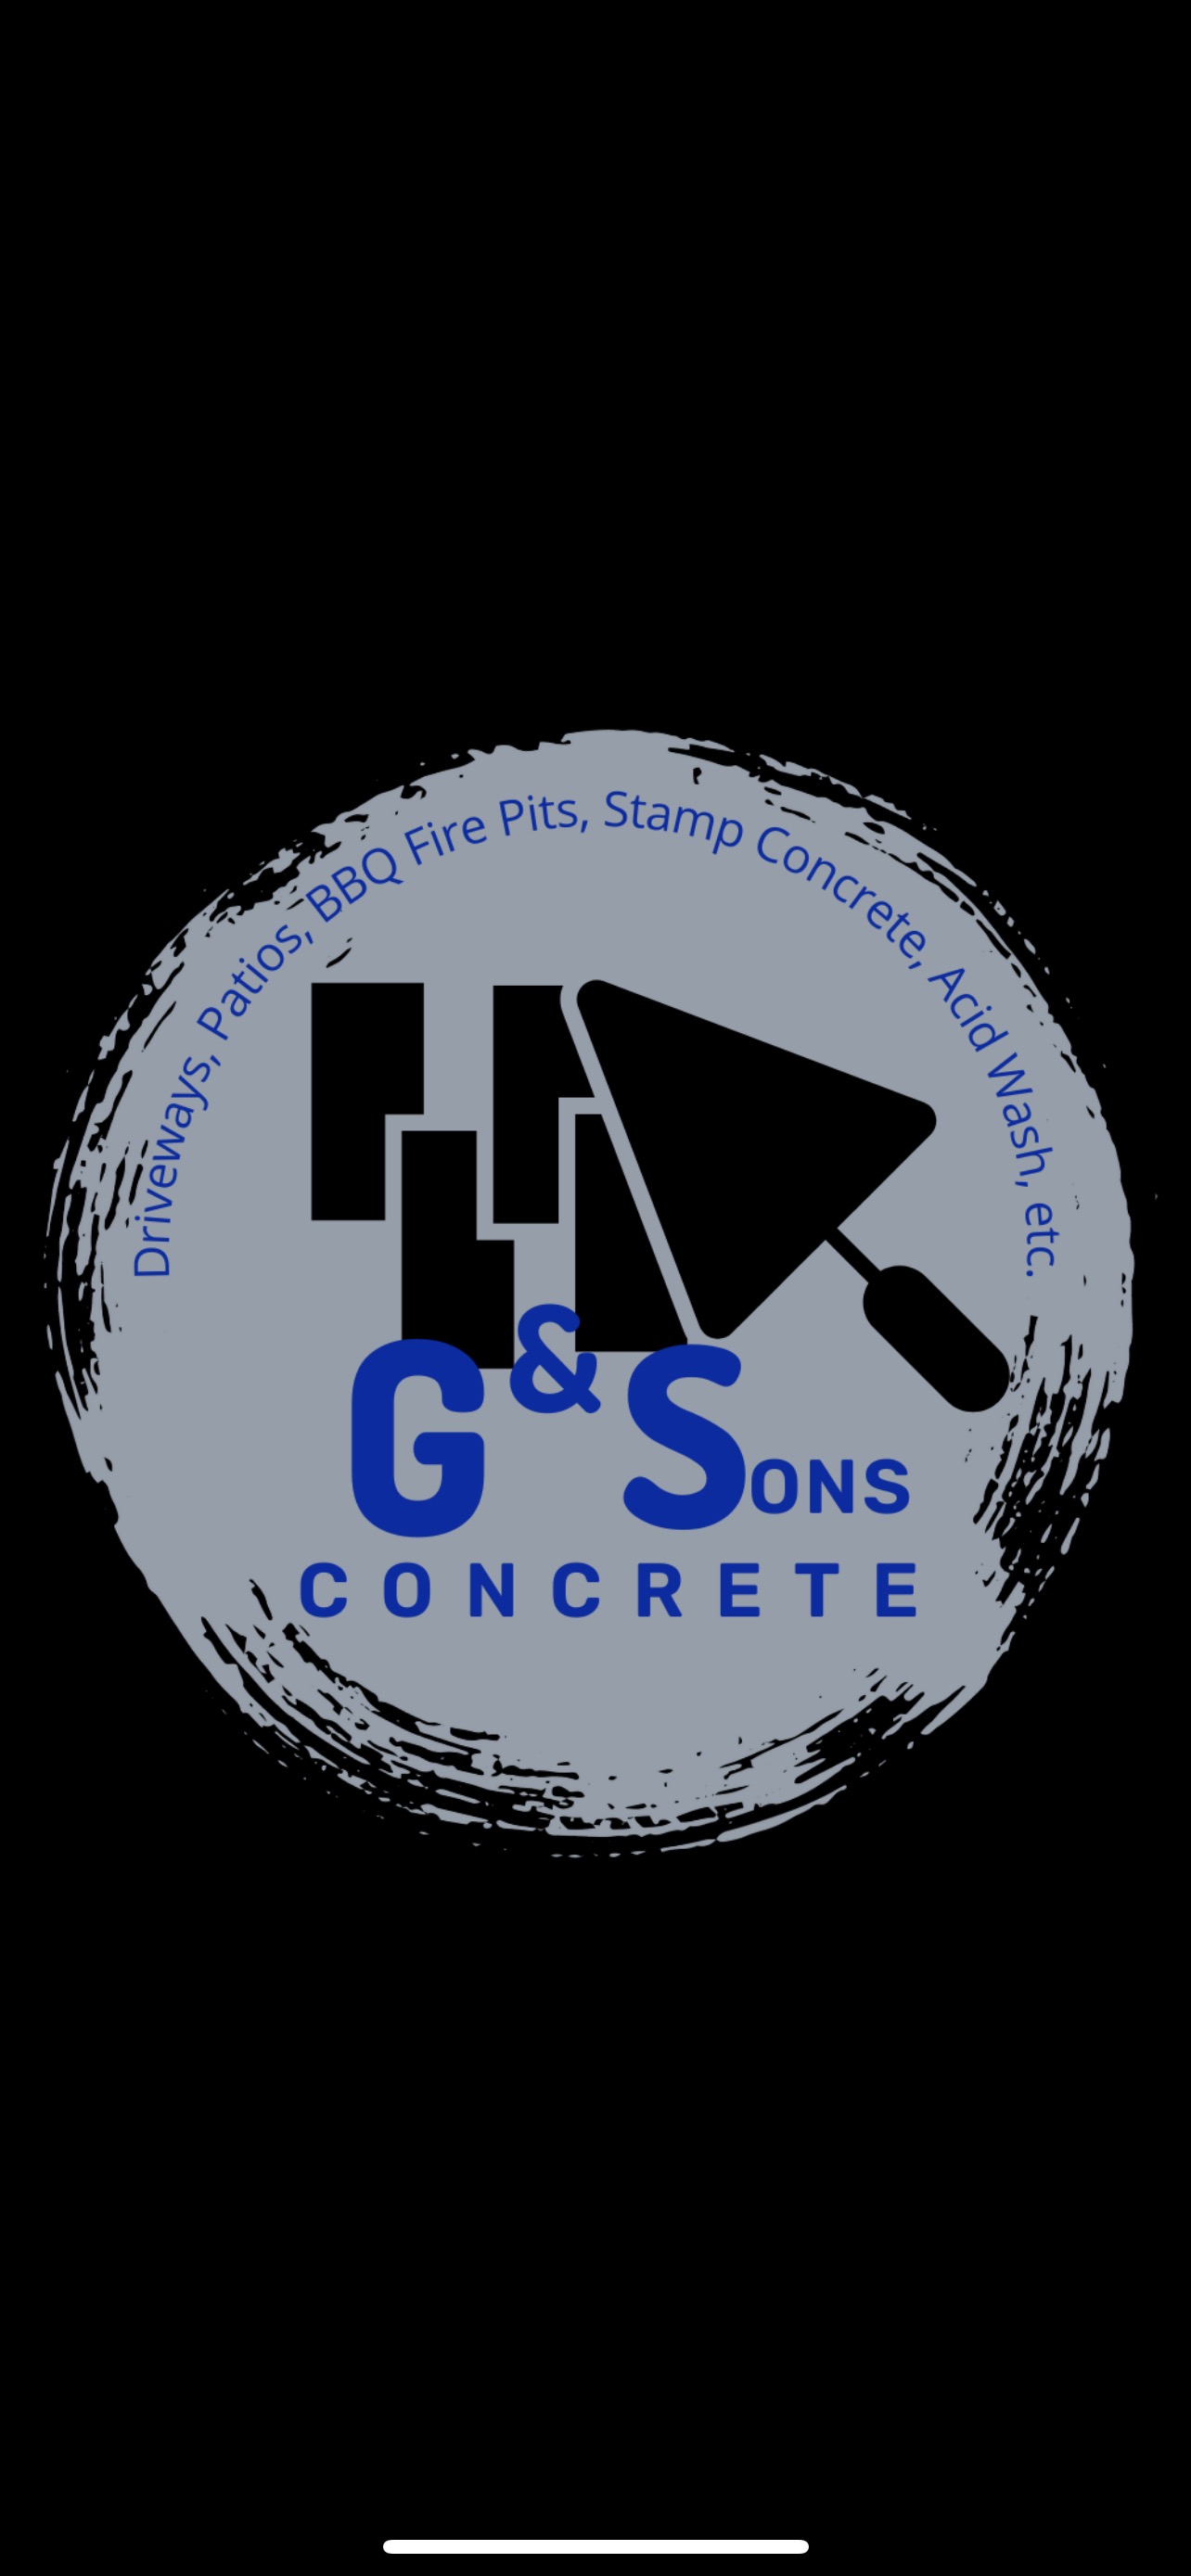 G & Sons Concrete-Unlicensed Contractor Logo